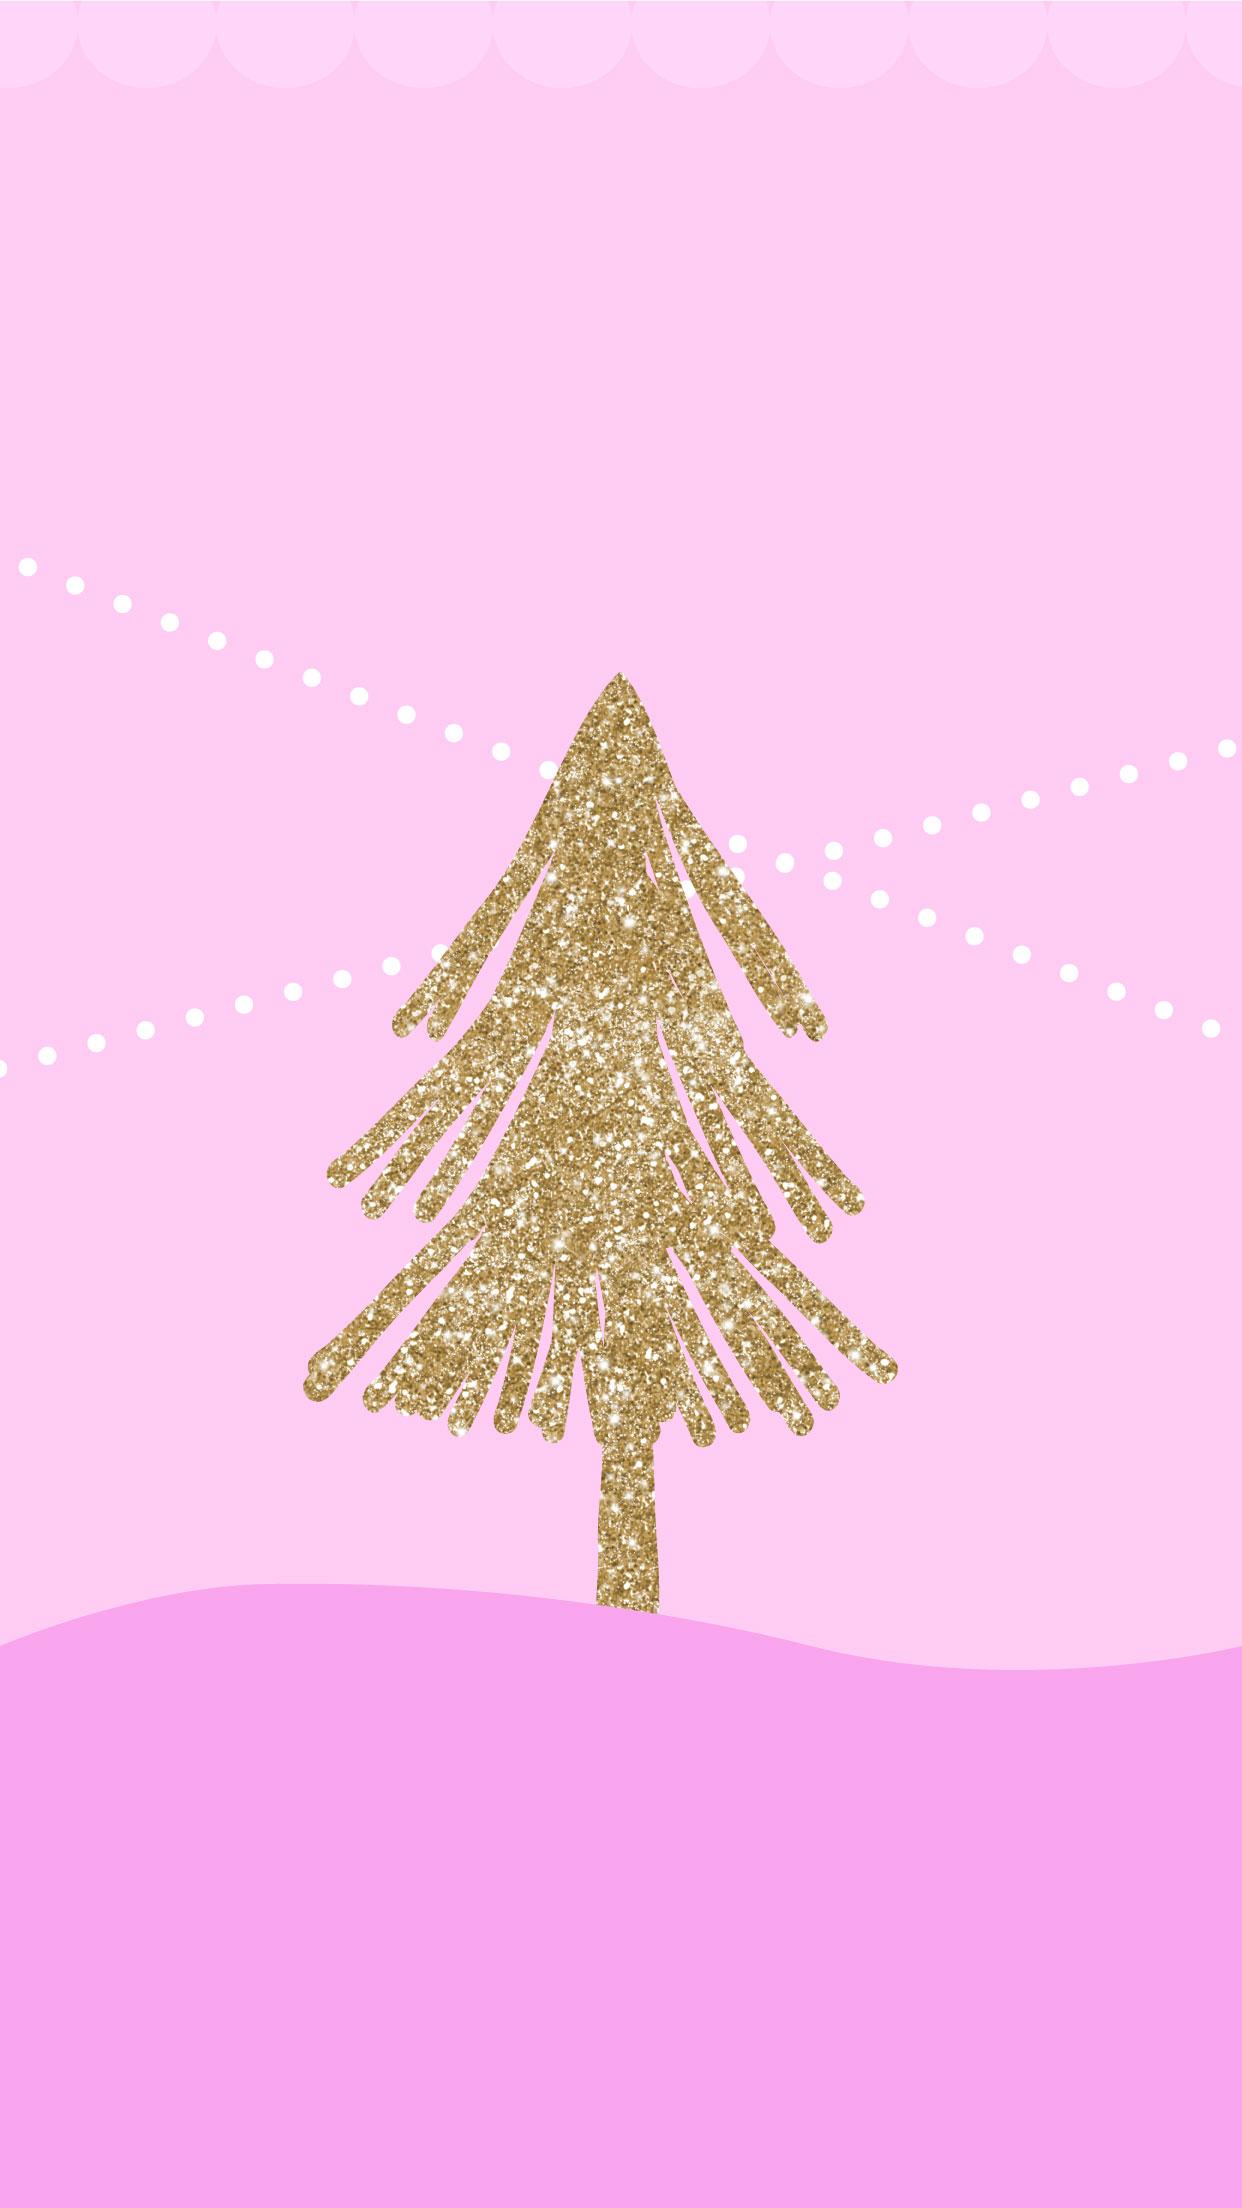 Digital Christmas Wallpaper: Glittery Christmas Tree Pink